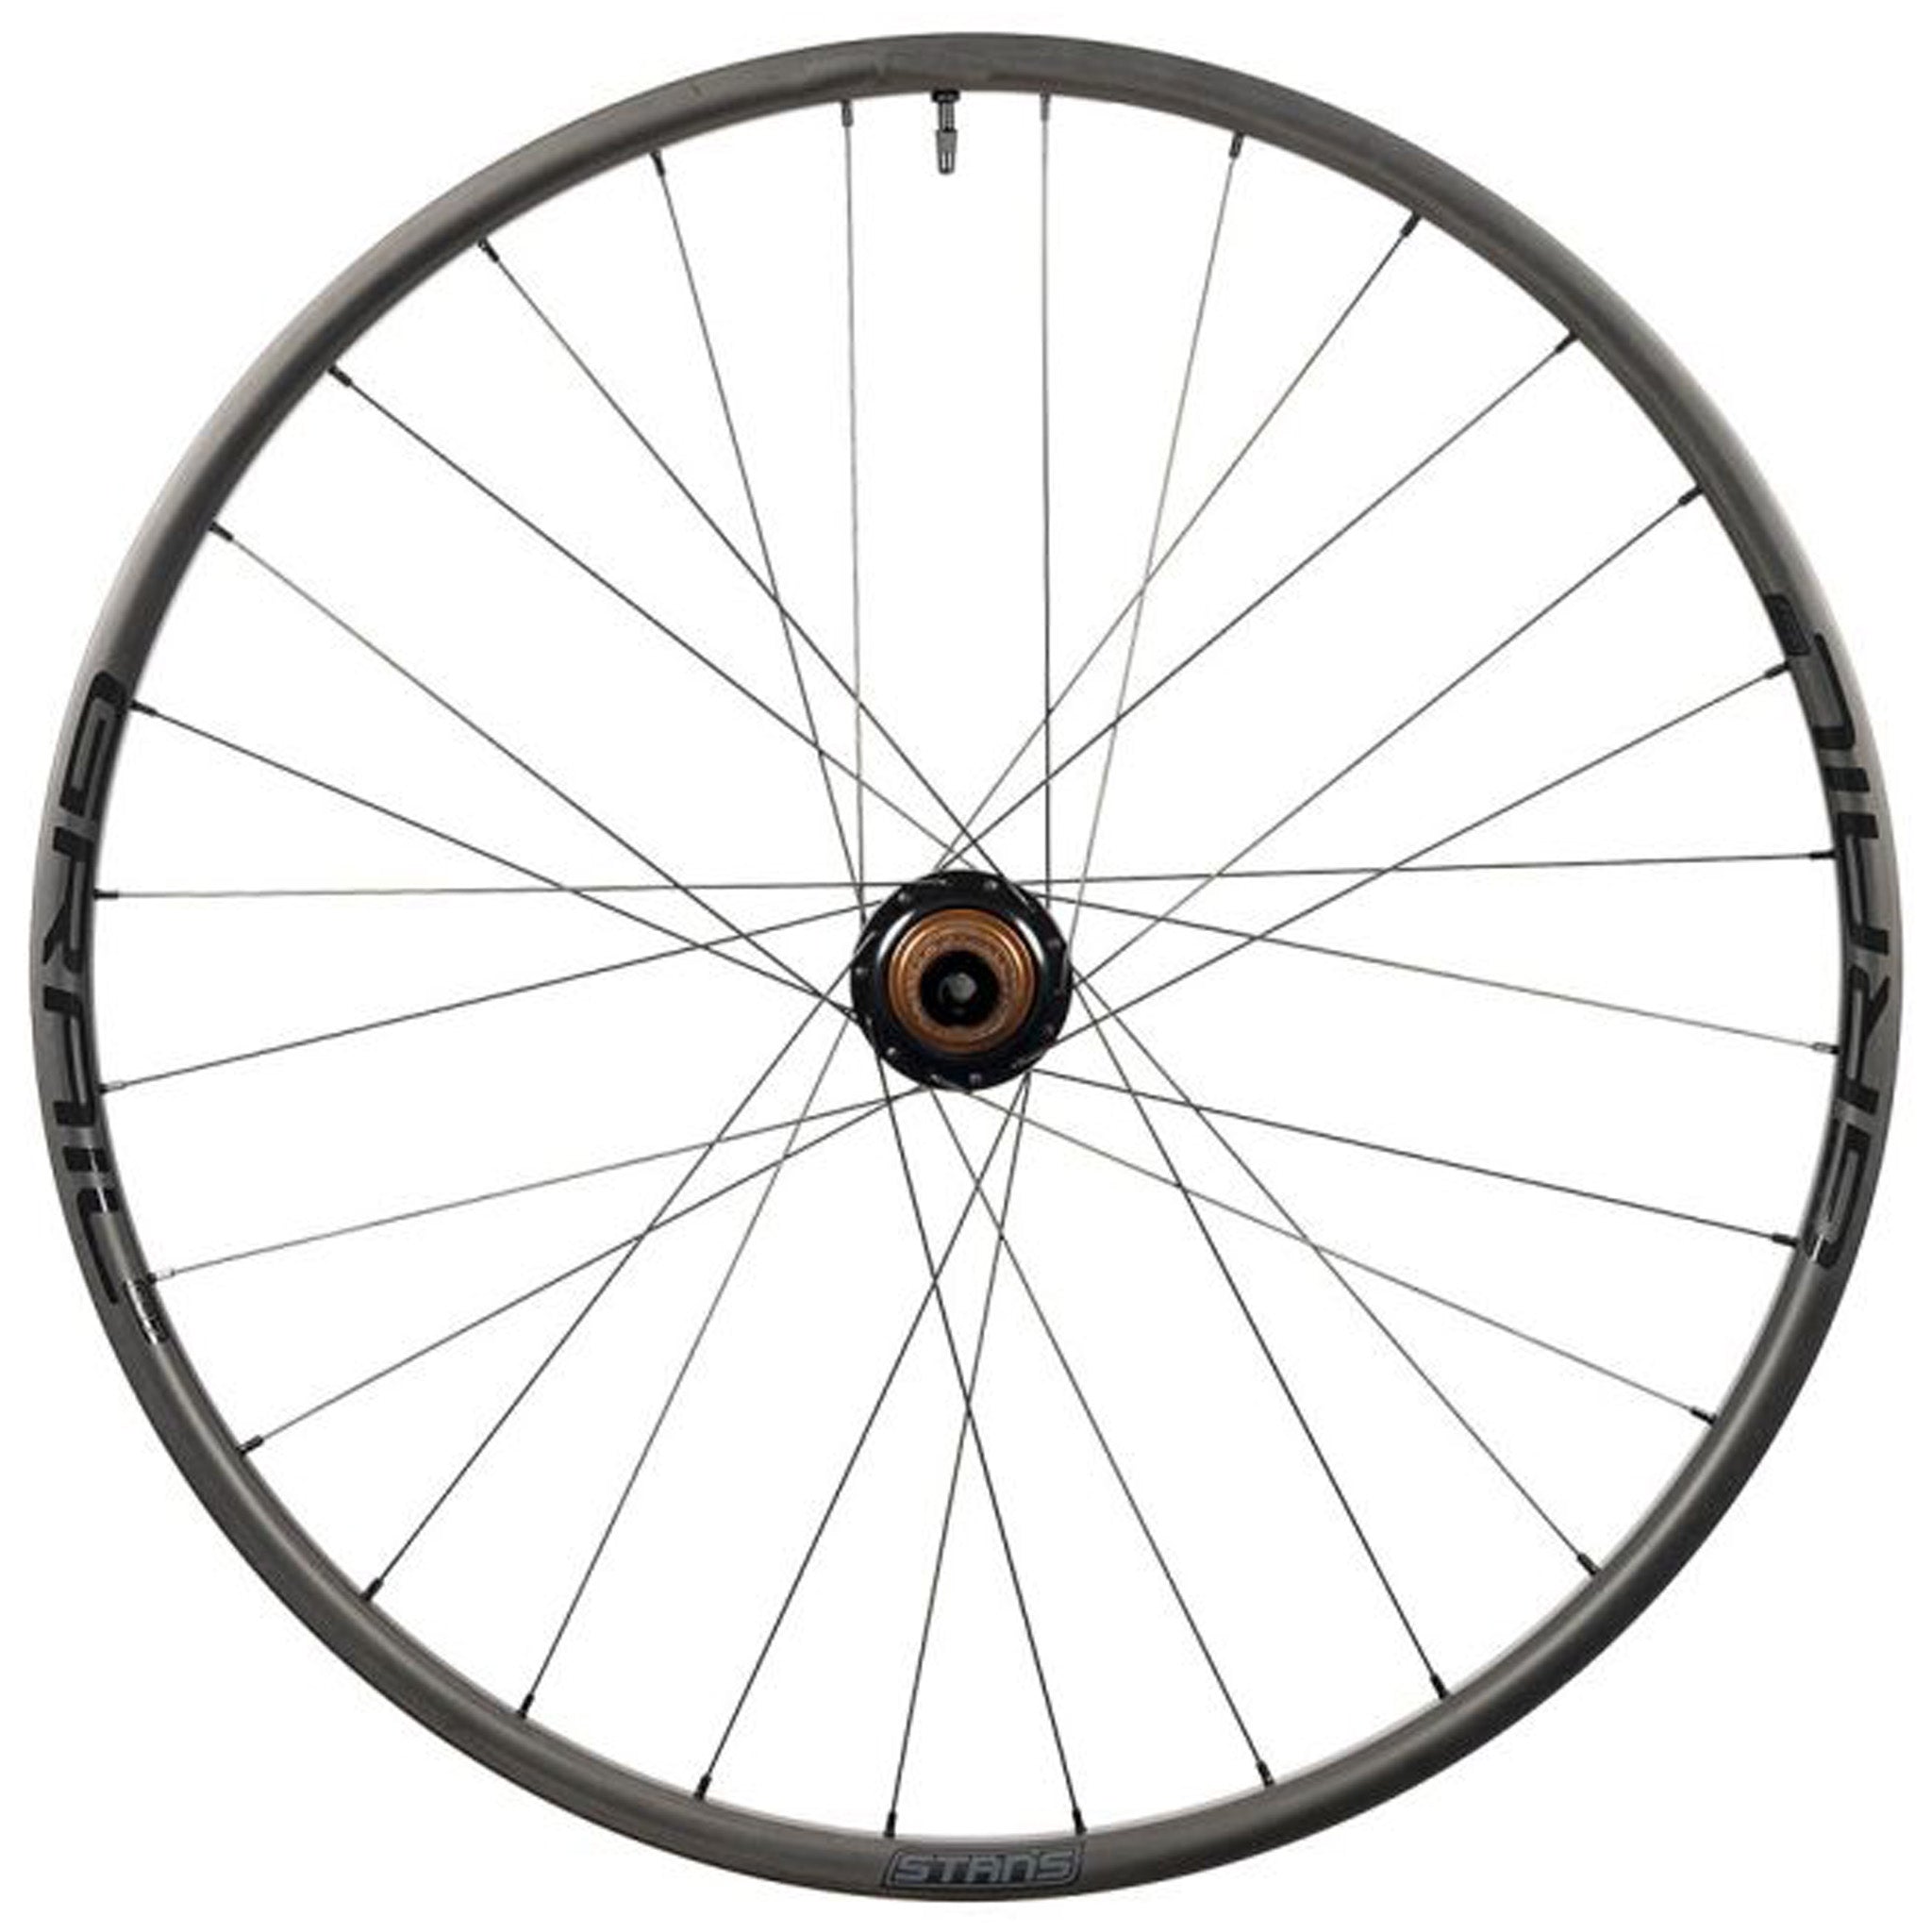 Stans No Tubes Grail CB7 Rear Wheel - 700 12 x 142mm Center-Lock MicroSpline Gray